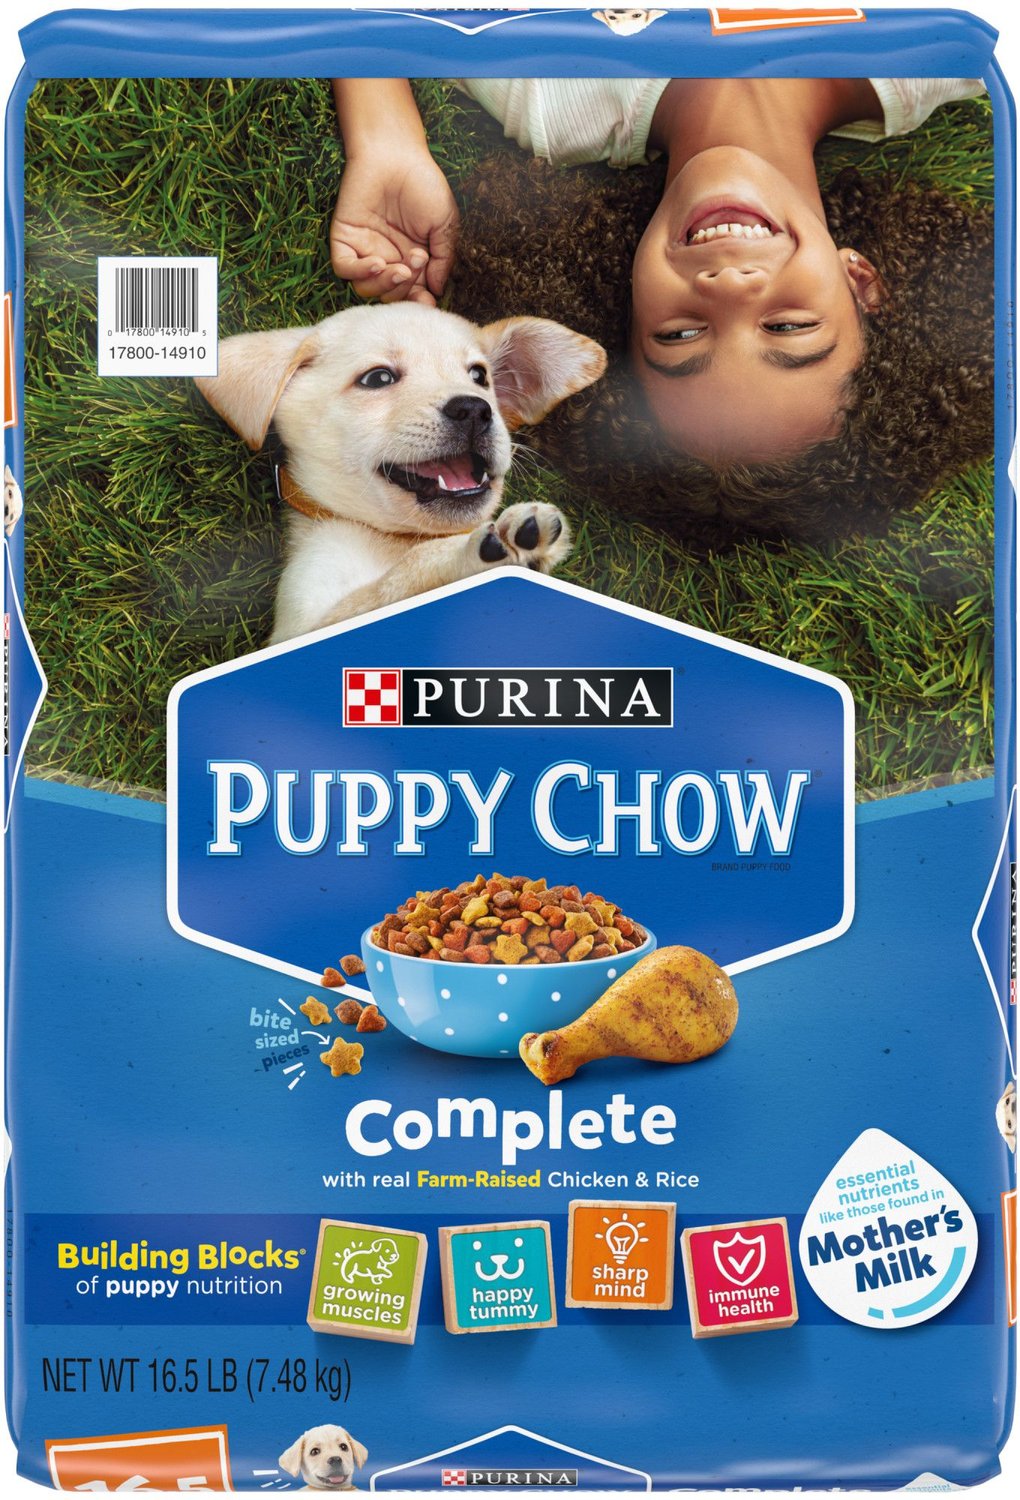 Dog Chow Dog Food Clearance Store, Save 70 jlcatj.gob.mx